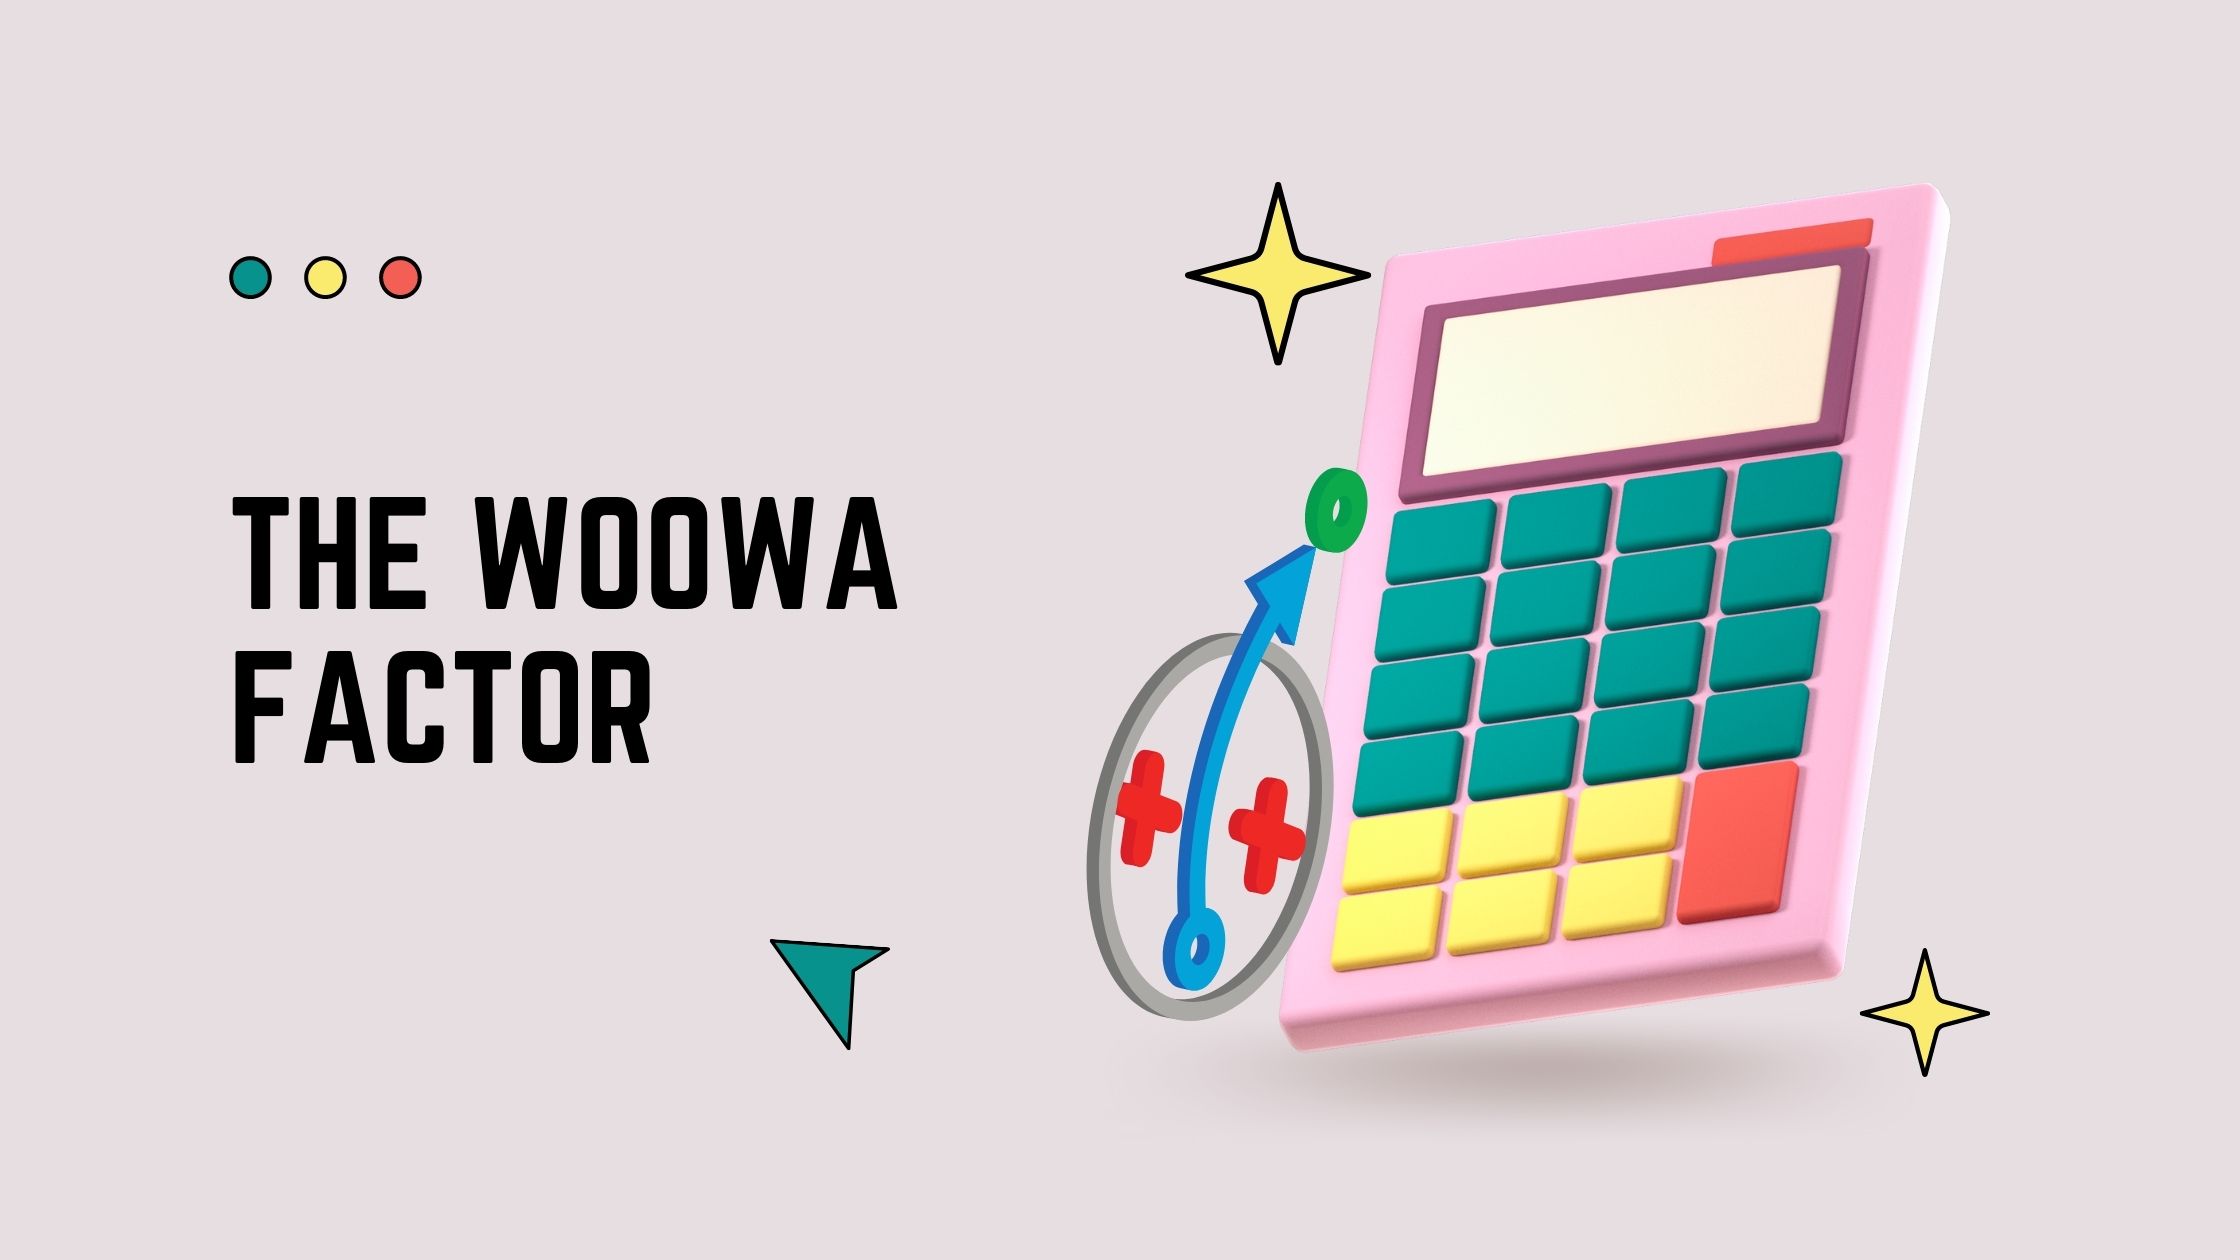 The Woowa factor